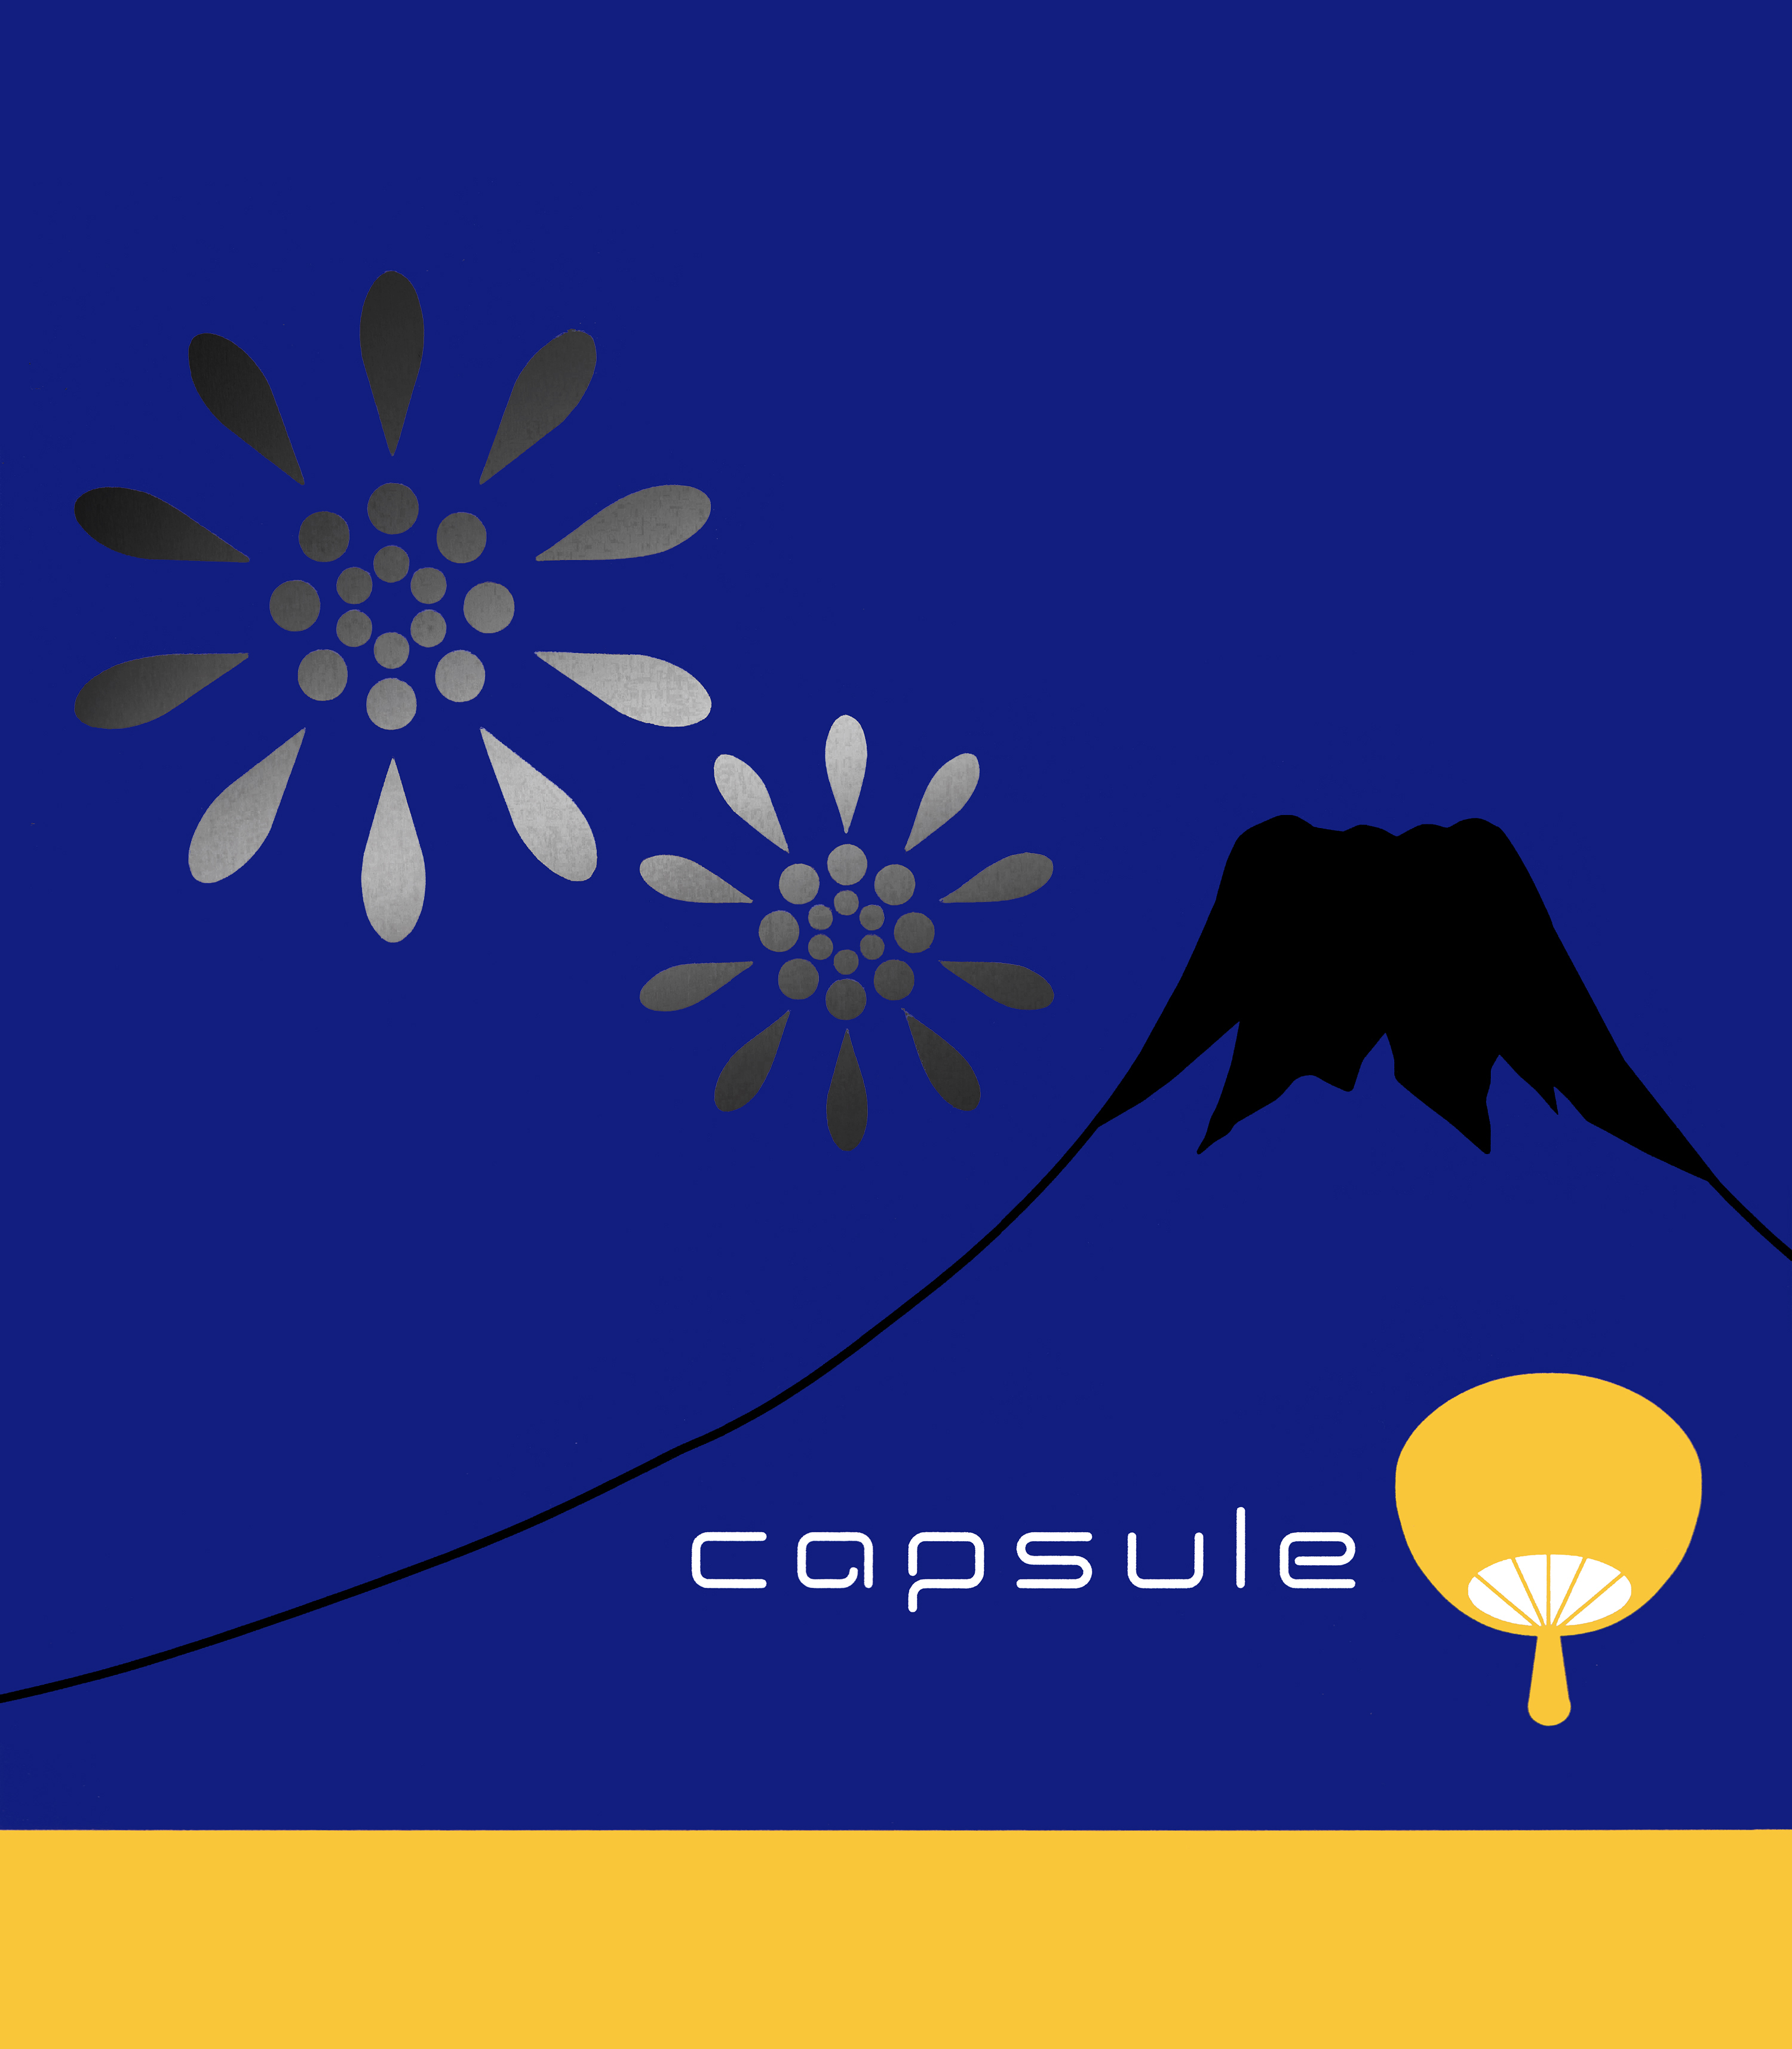 capsule (カプセル) 2ndシングル『花火』(2001年7月4日発売) 高画質CDジャケット画像 (ジャケ写)